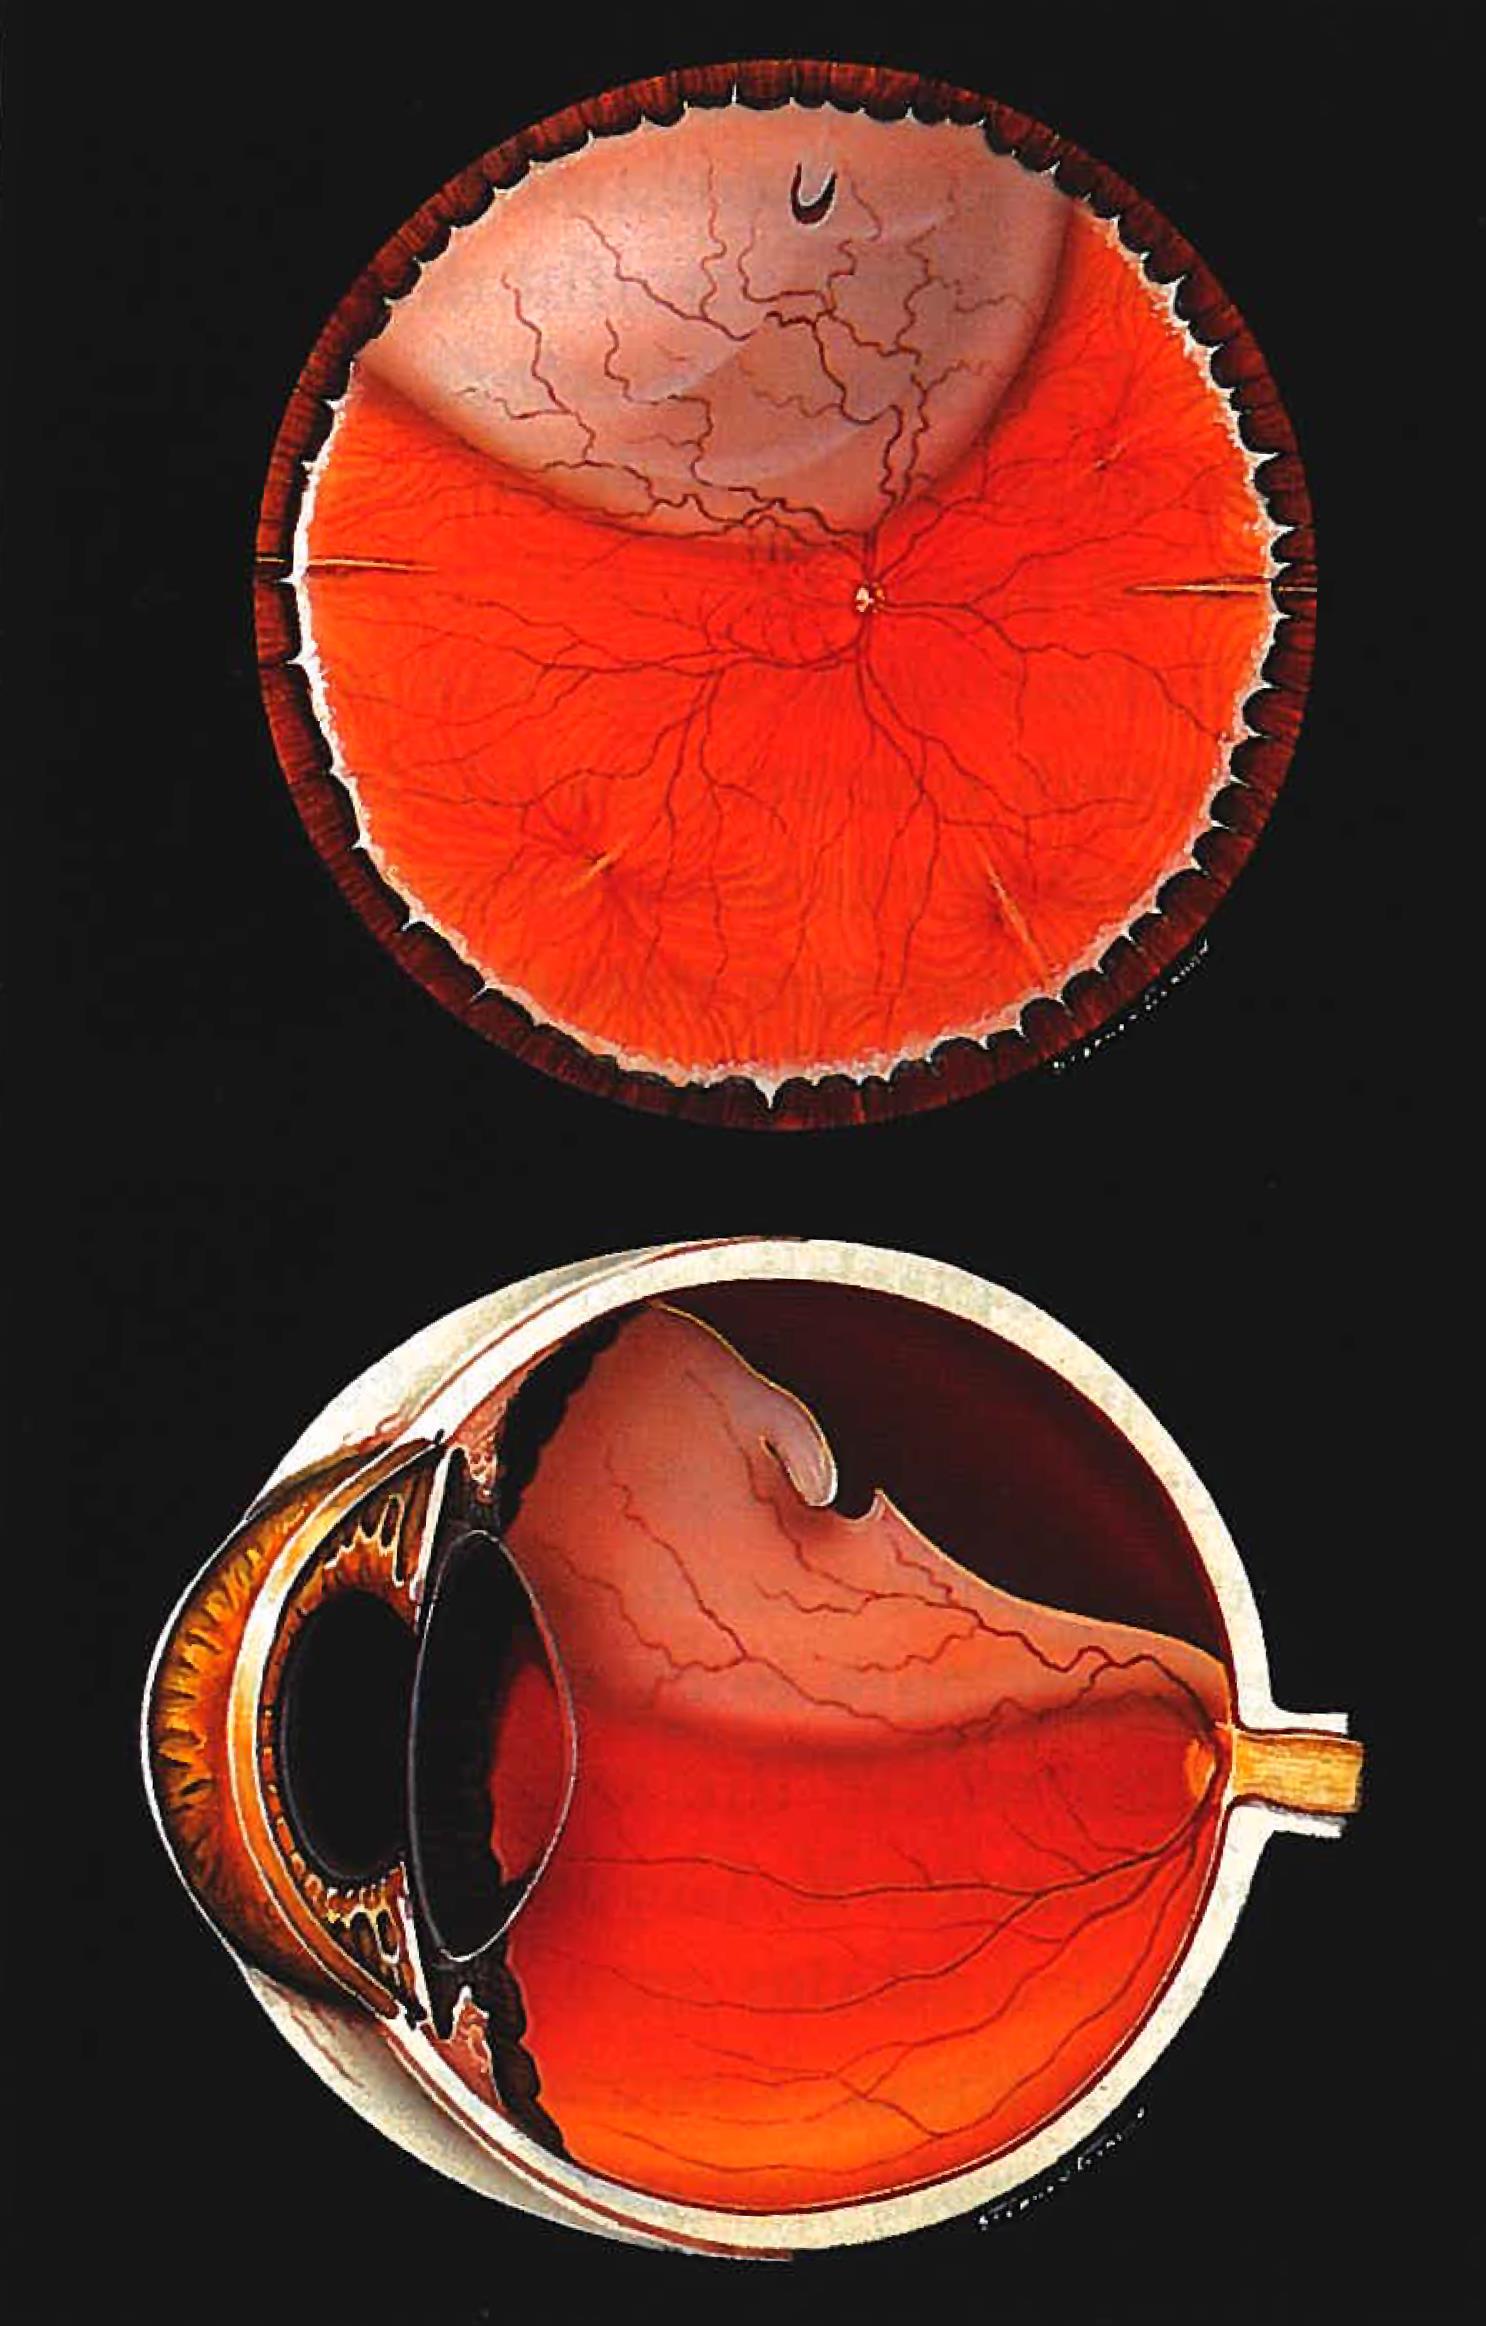 retinal detachment causes